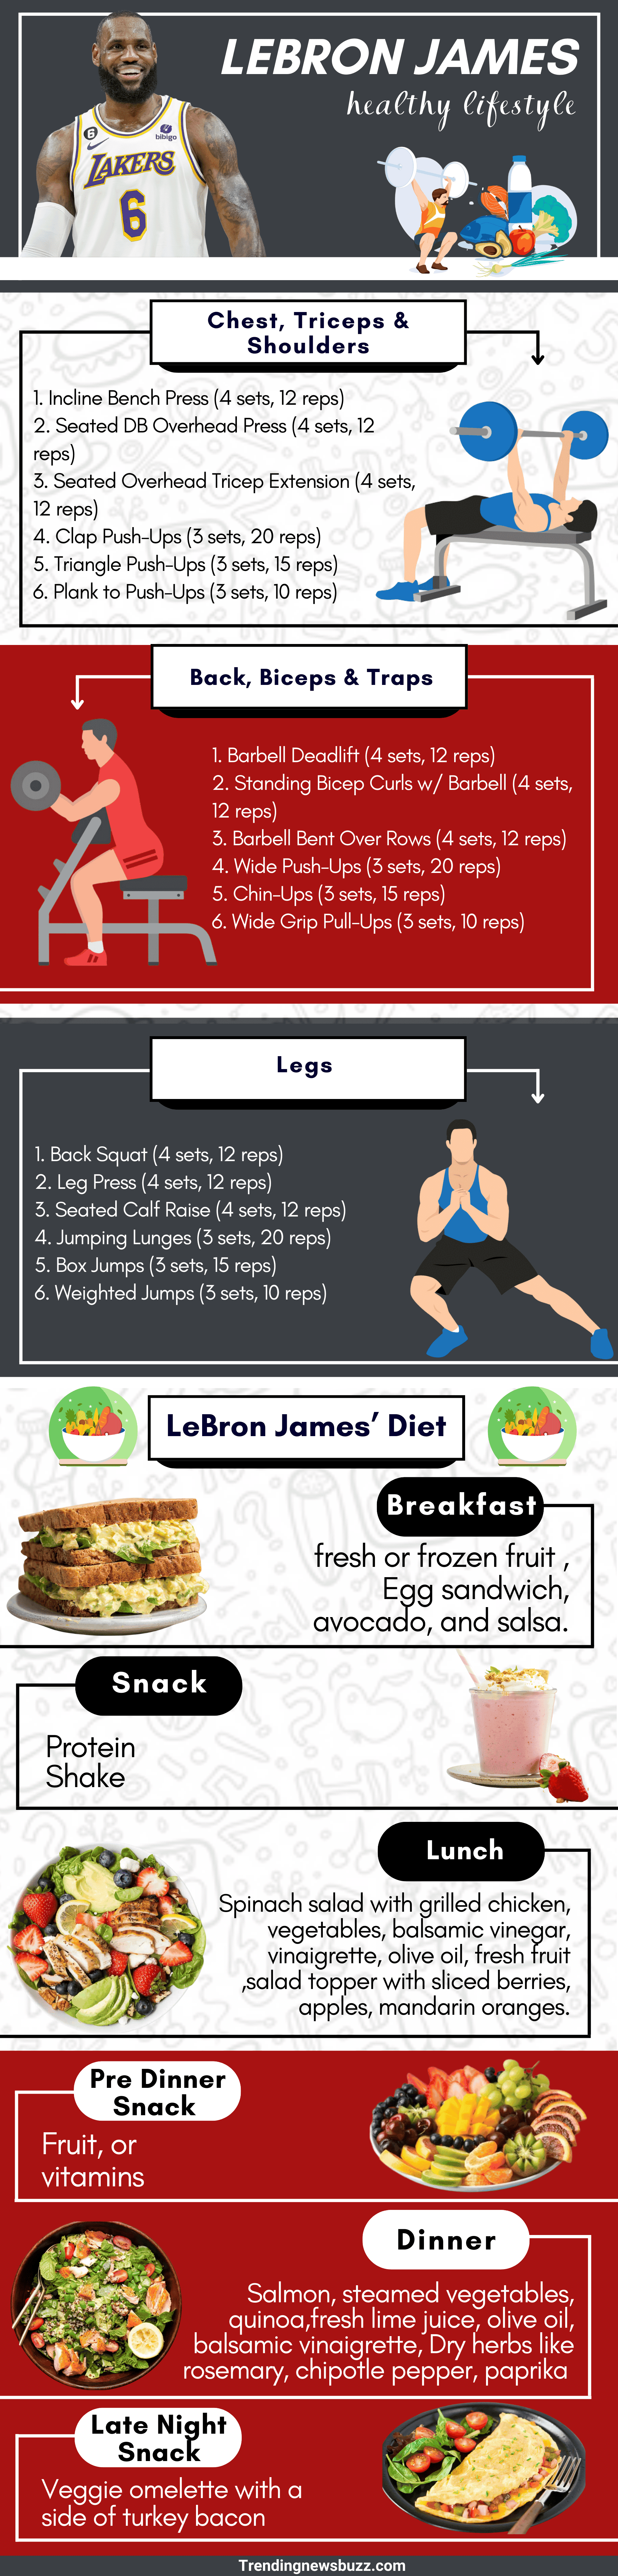 lebron james healthy lifestyle (1)